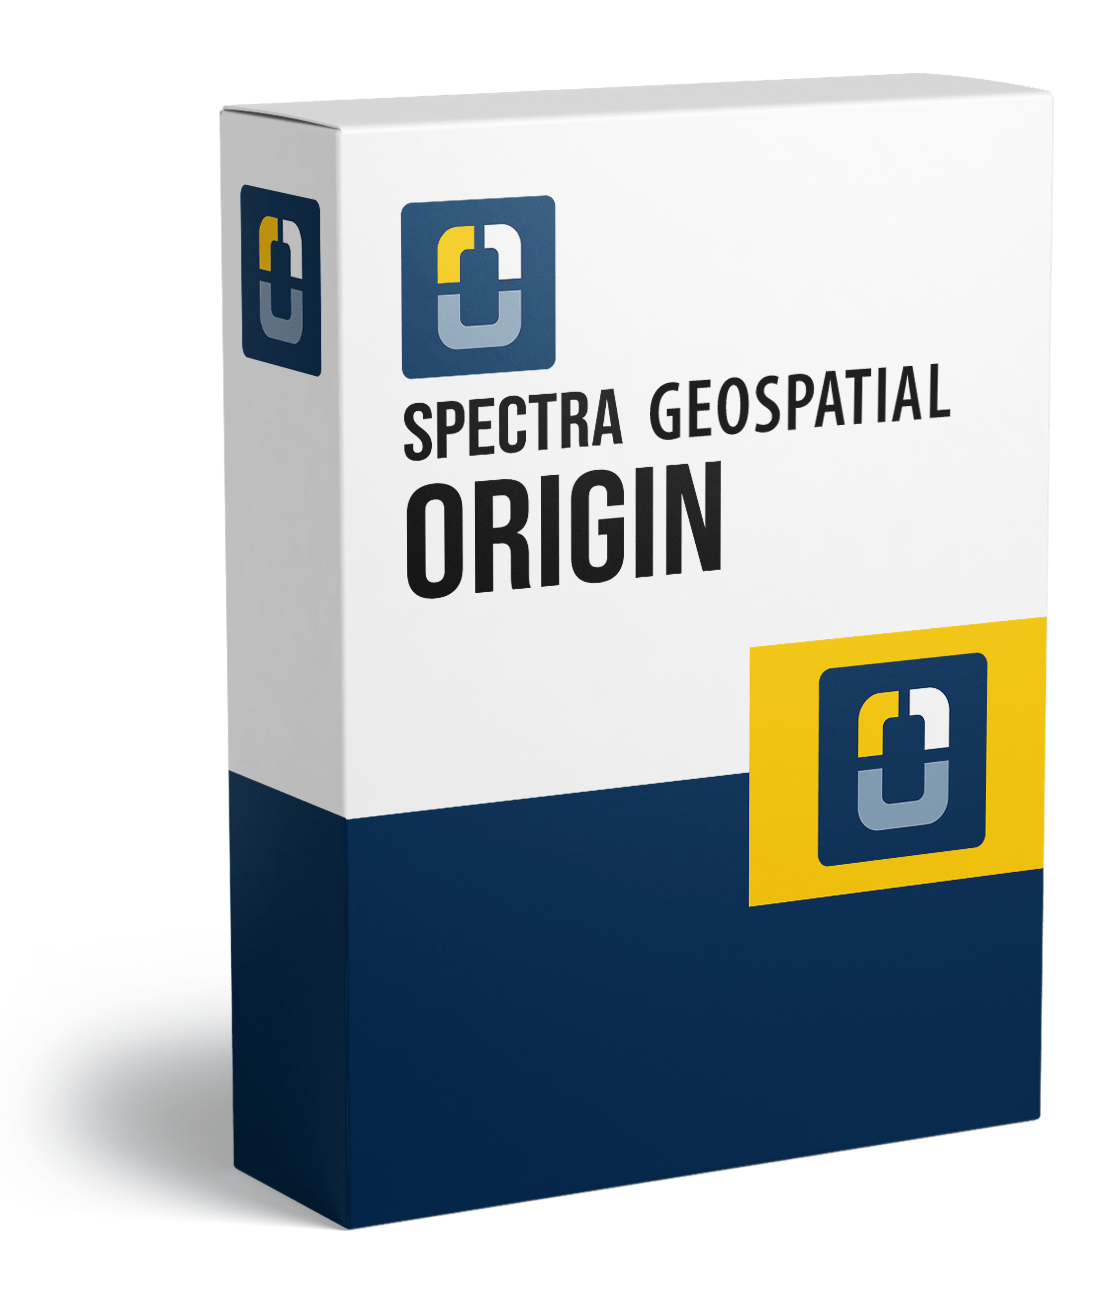 Spectra Geospatial Origin